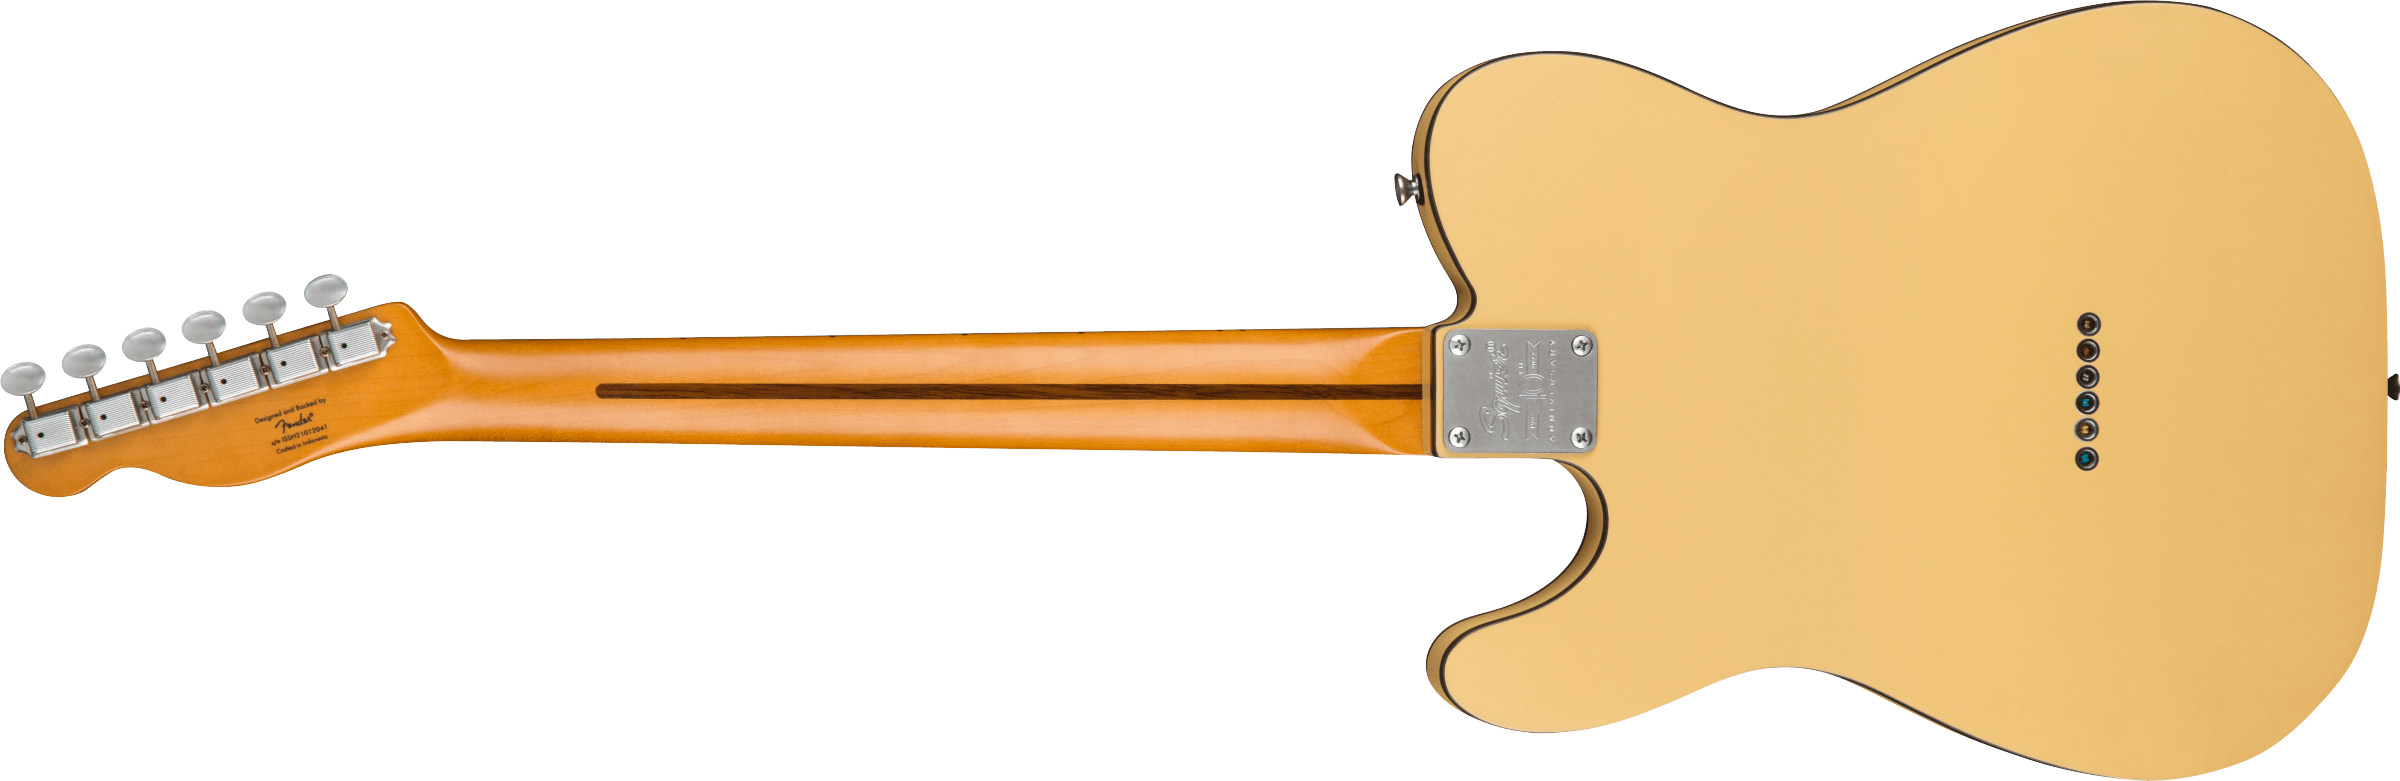 Squier Tele 40th Anniversary Vintage Edition Mn - Satin Vintage Blonde - Tel shape electric guitar - Variation 1